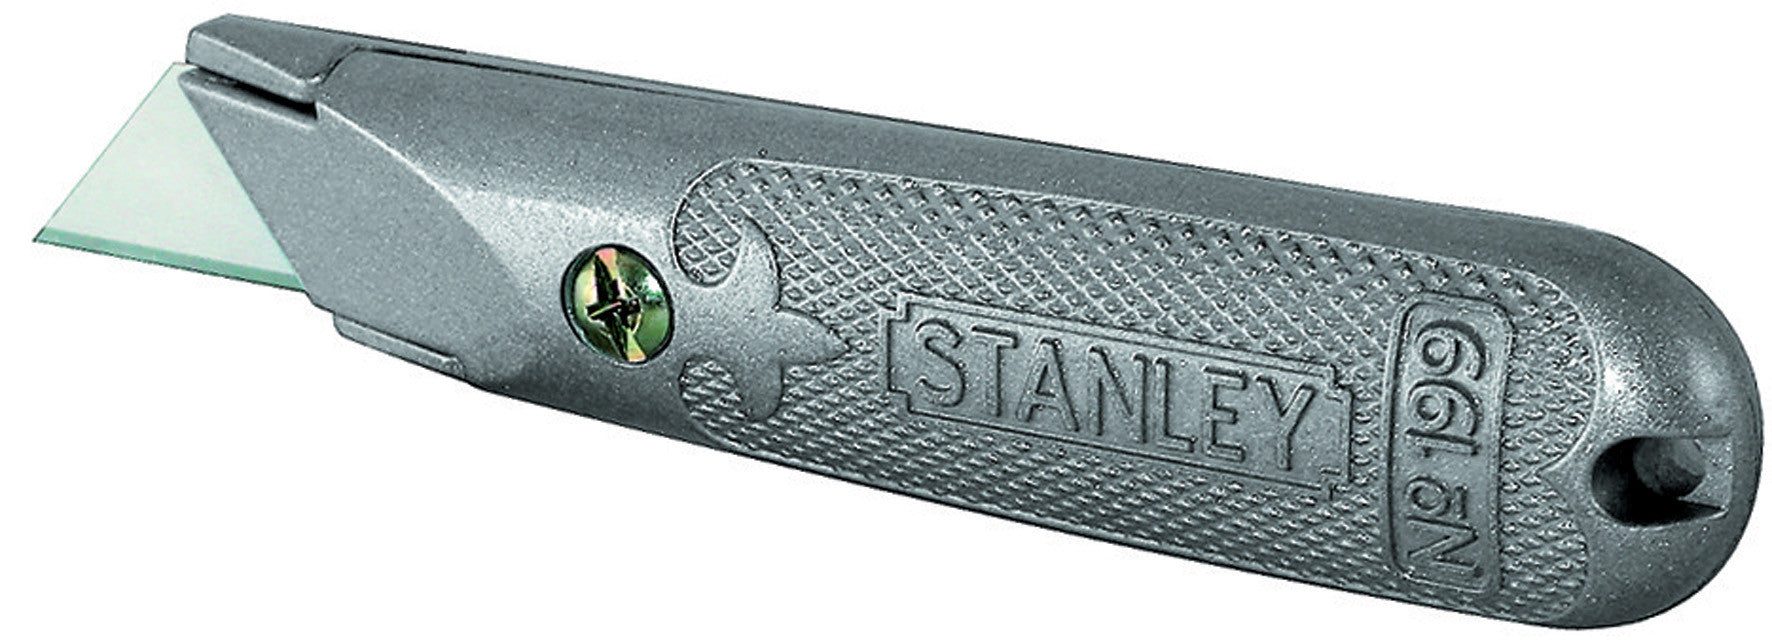 St cutter metallo lama fissa mm.18  1-10-199* STANLEY